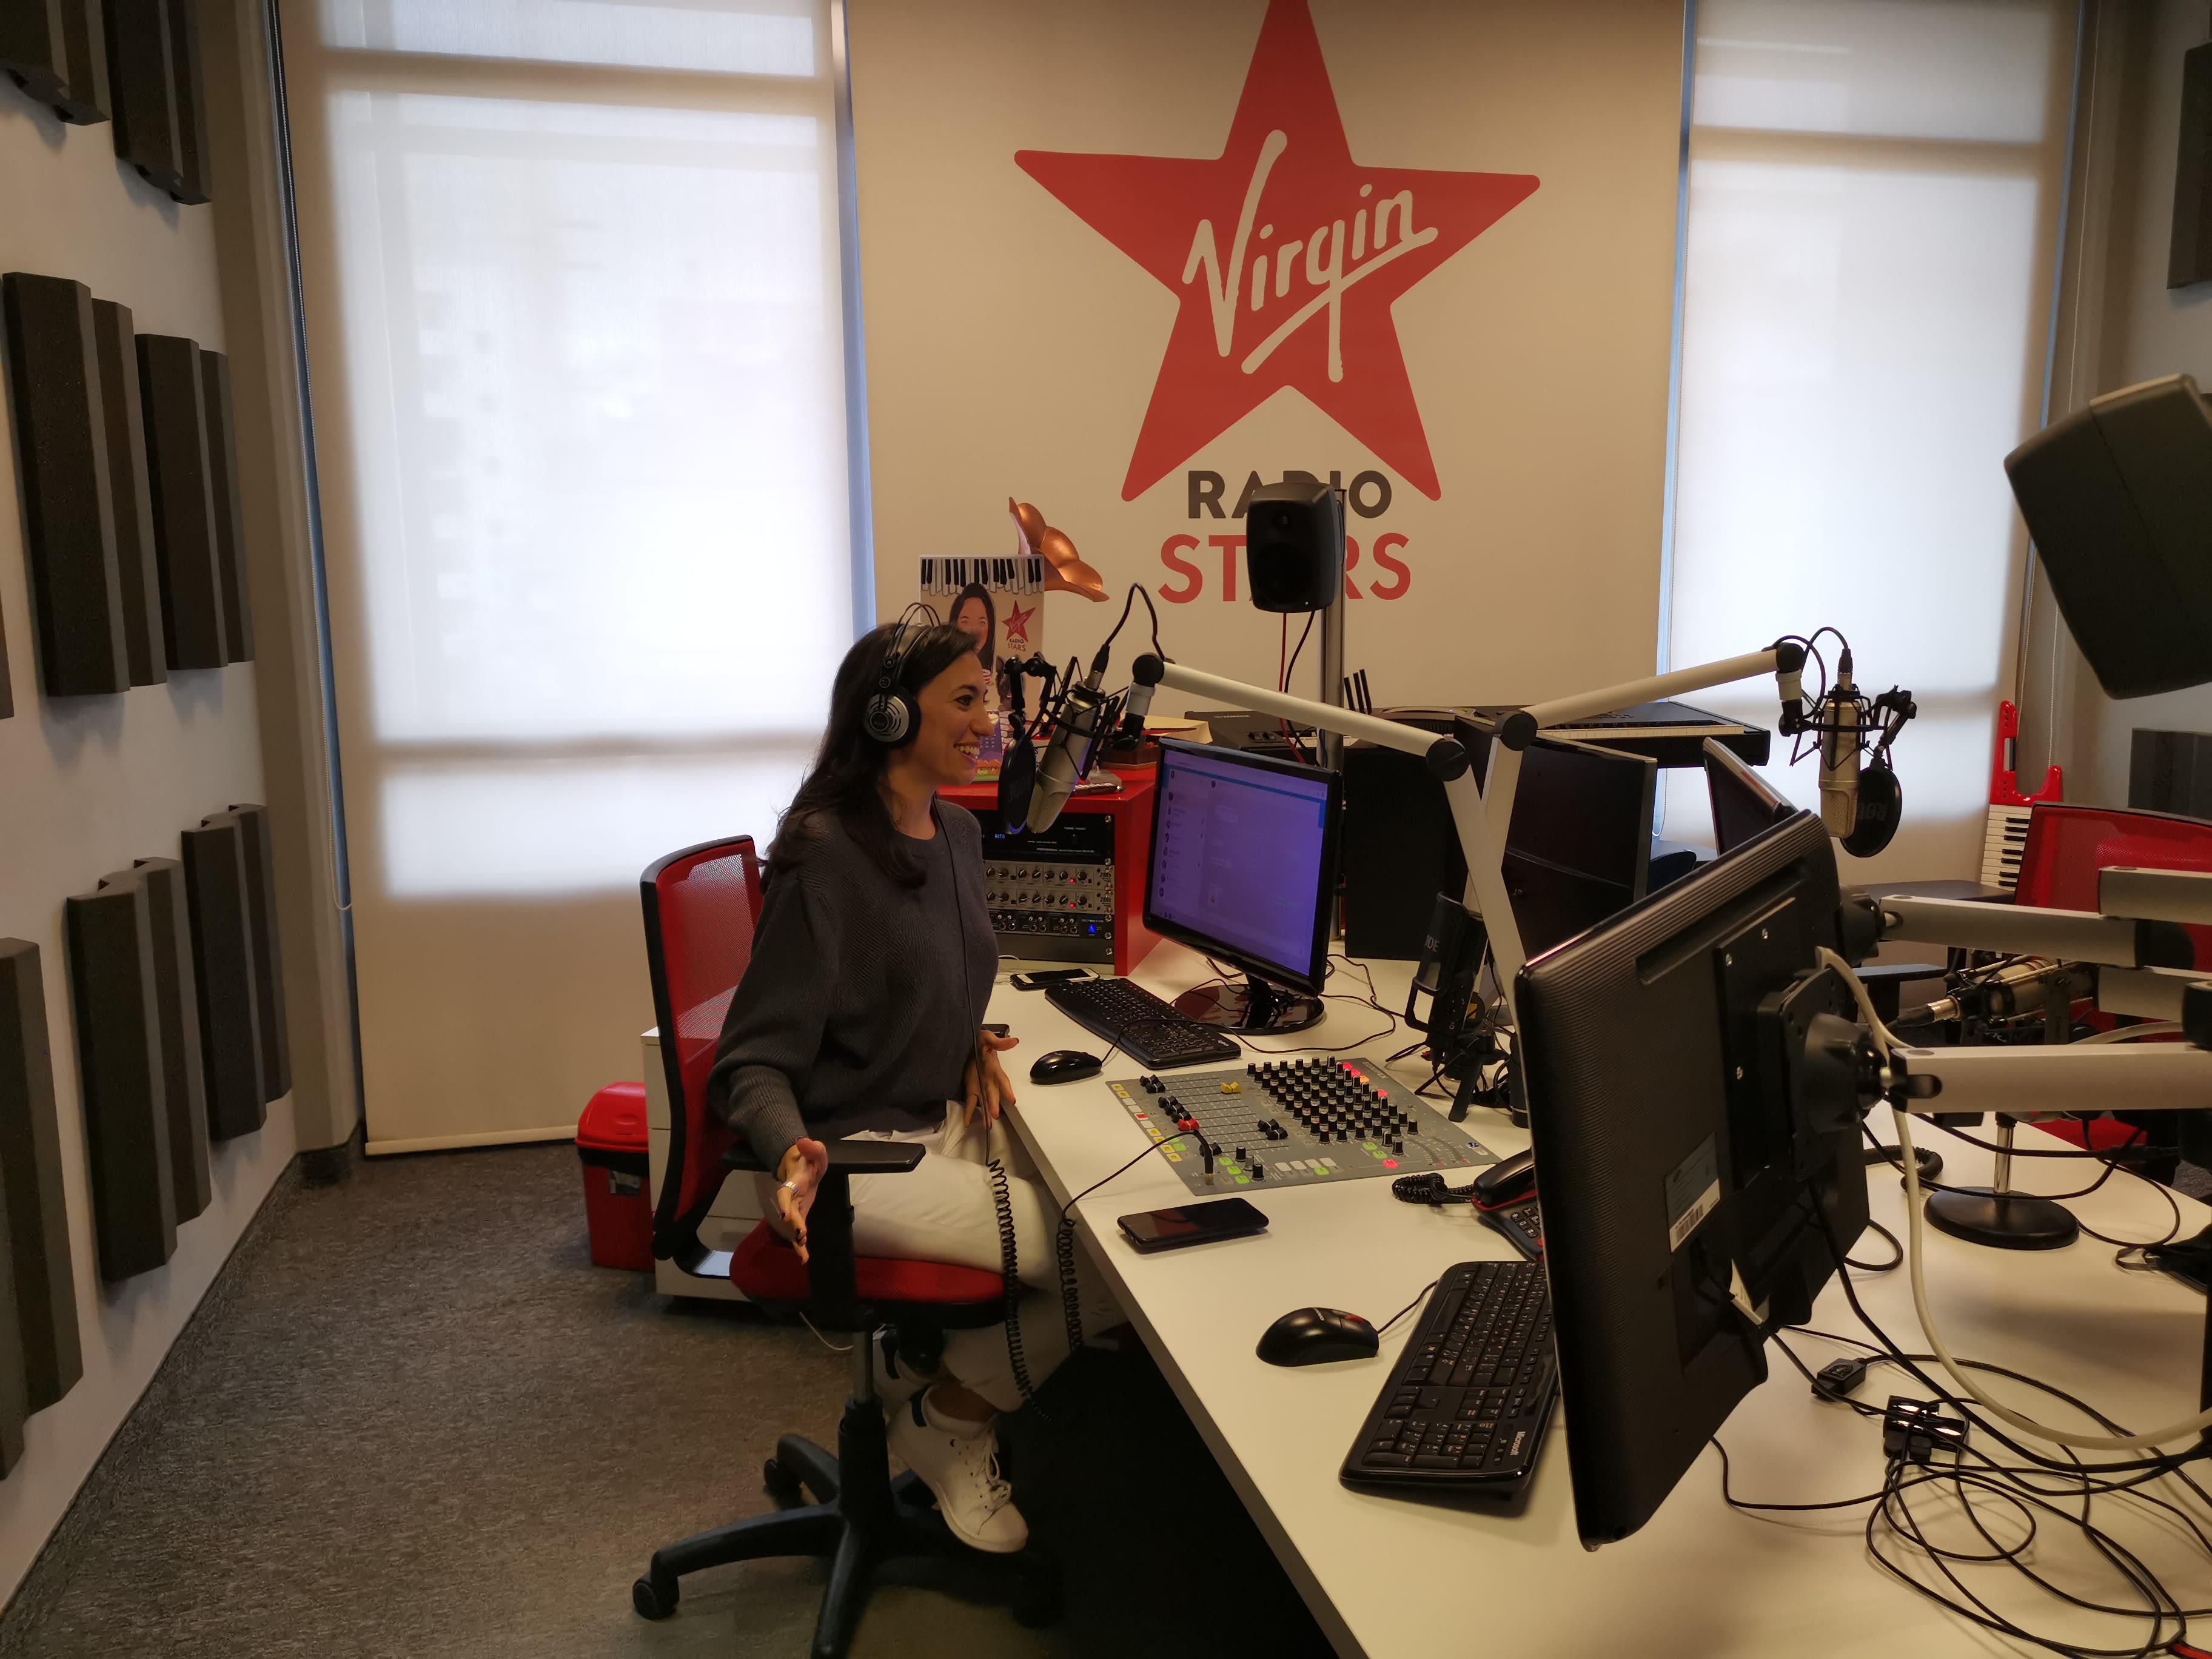 The Virgin Radio Lebanon studio